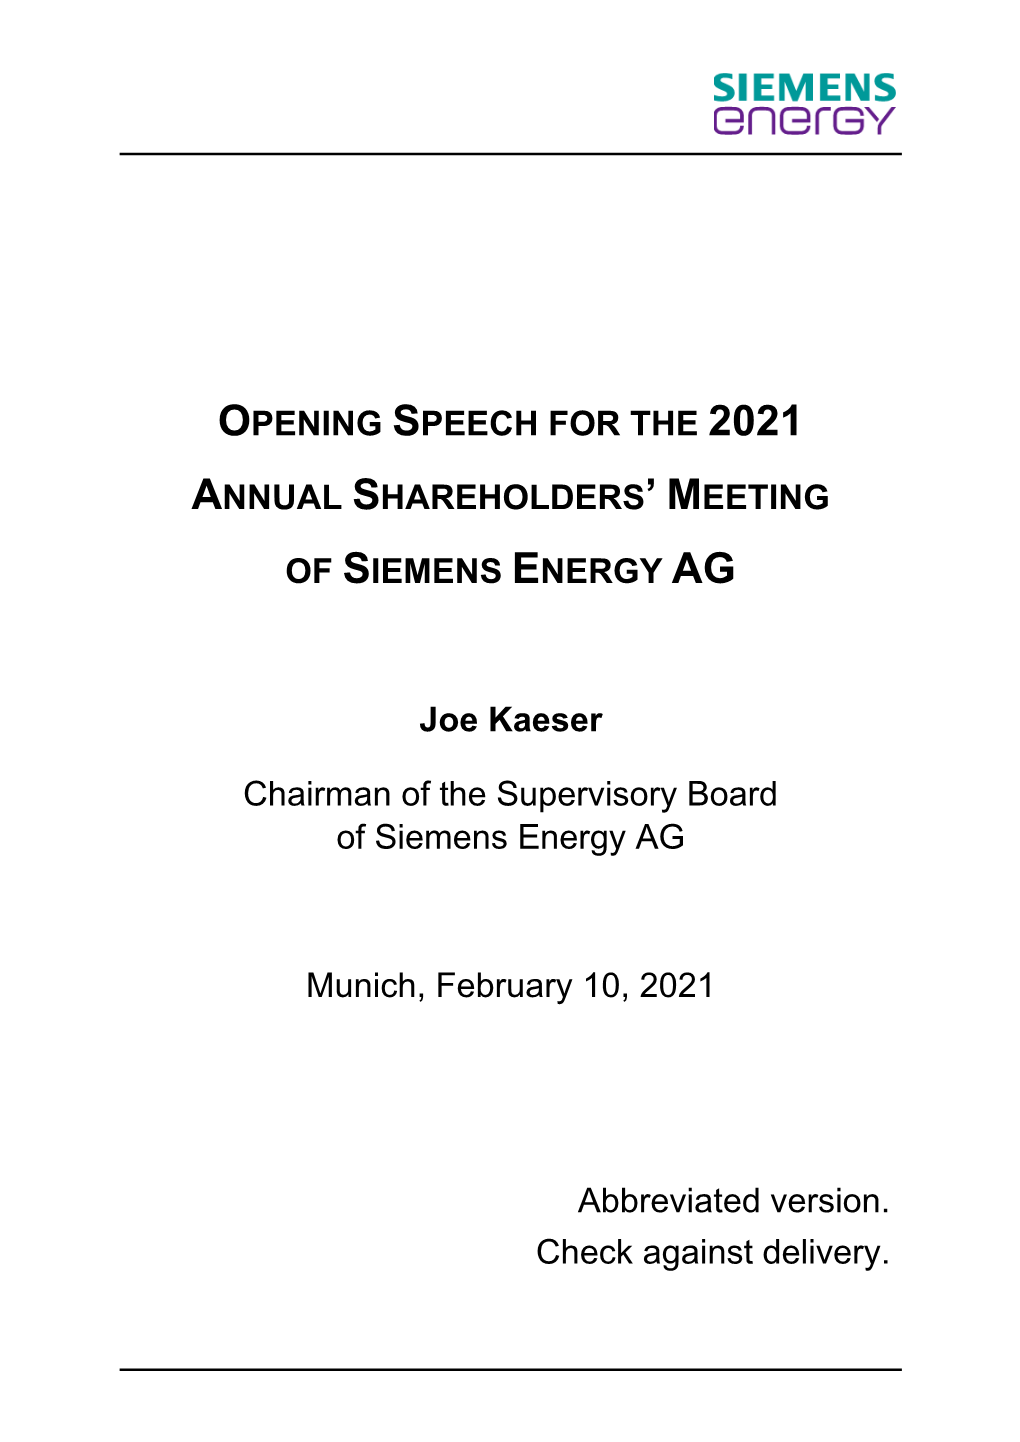 Opening Speech for the 2021 Annual Shareholders